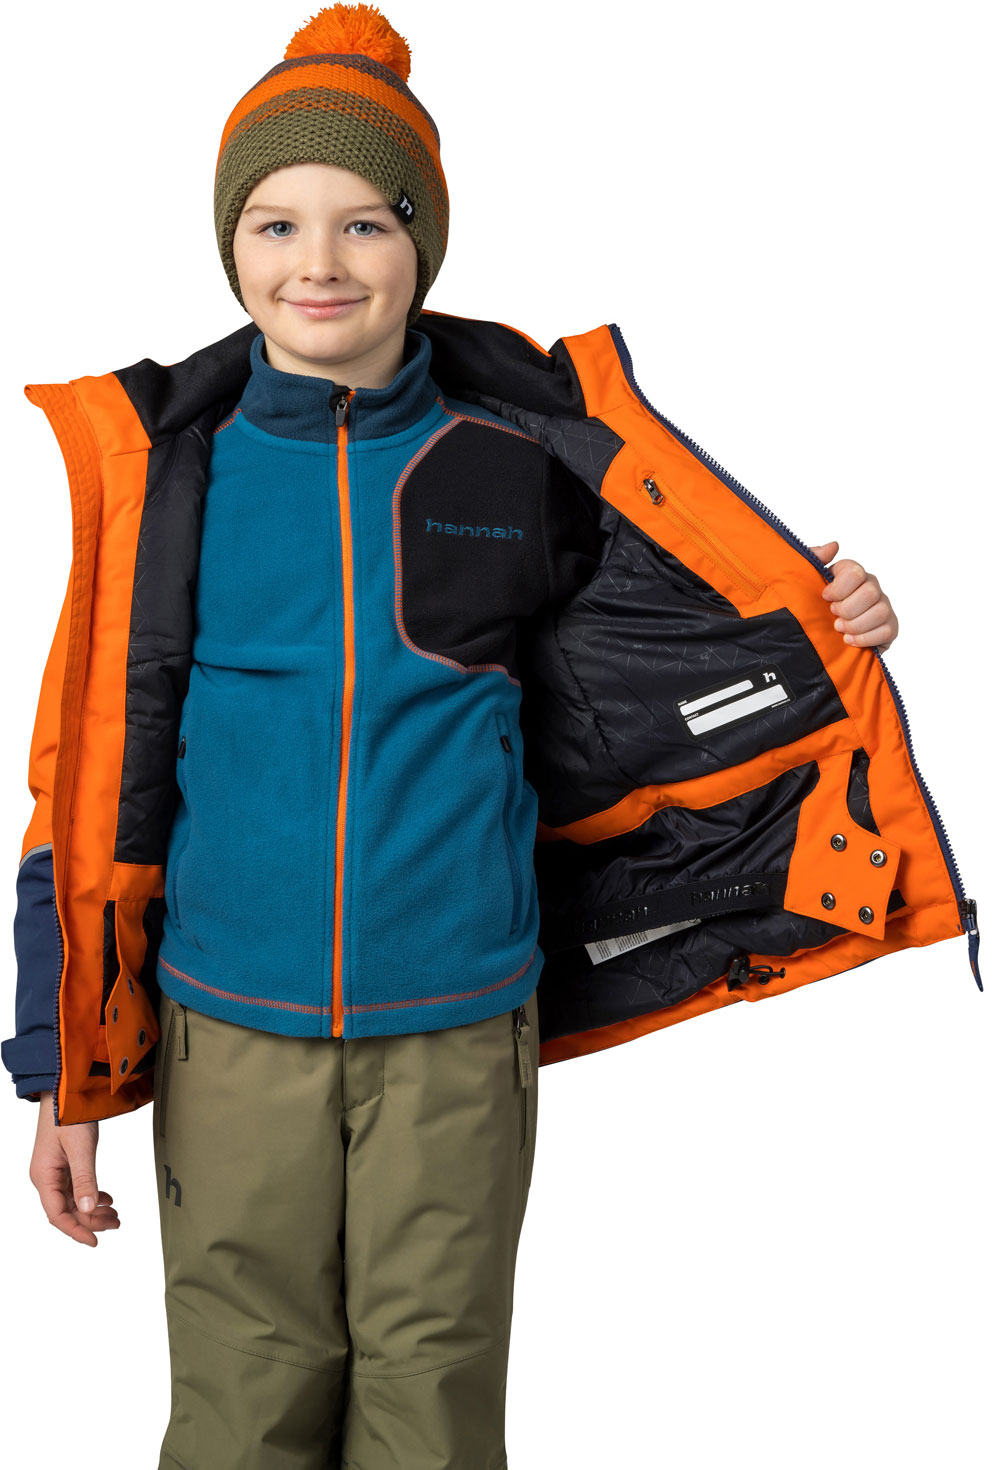 Children's winter ski jacket